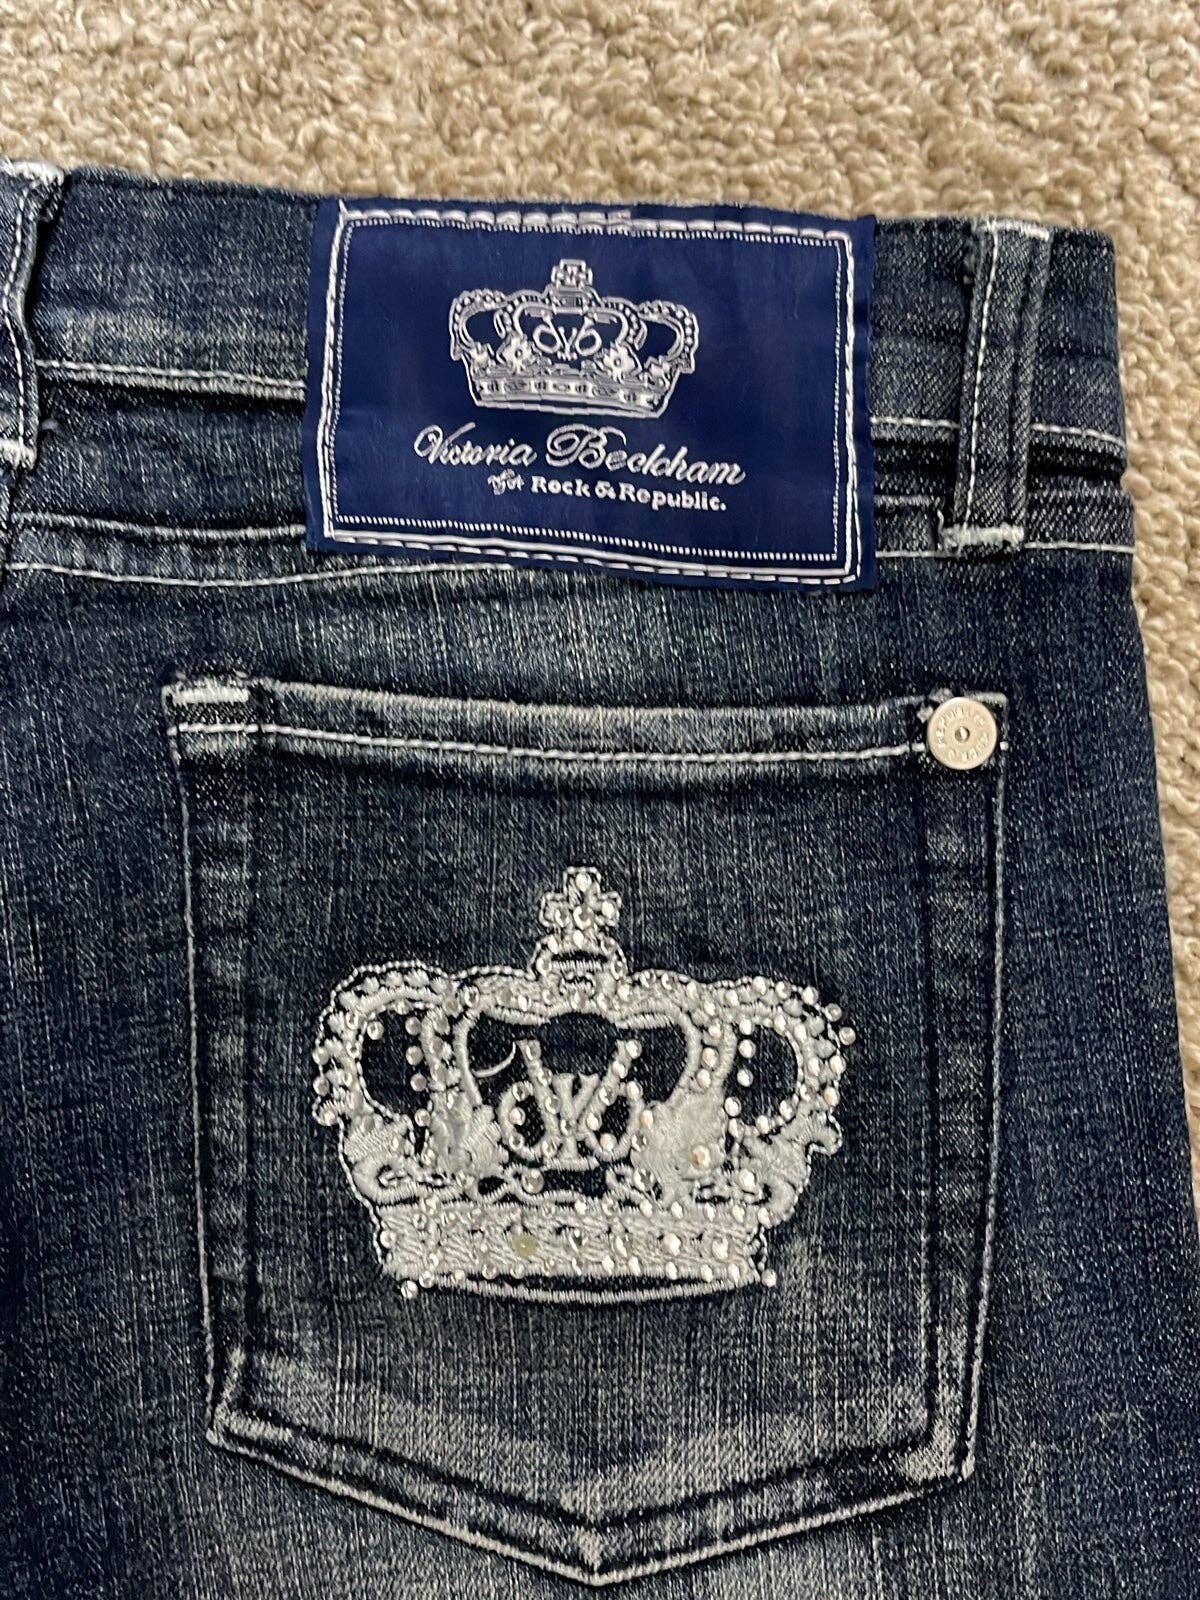 Victoria Beckham Republic Bootcut Jeans Womens 30 South - Etsy